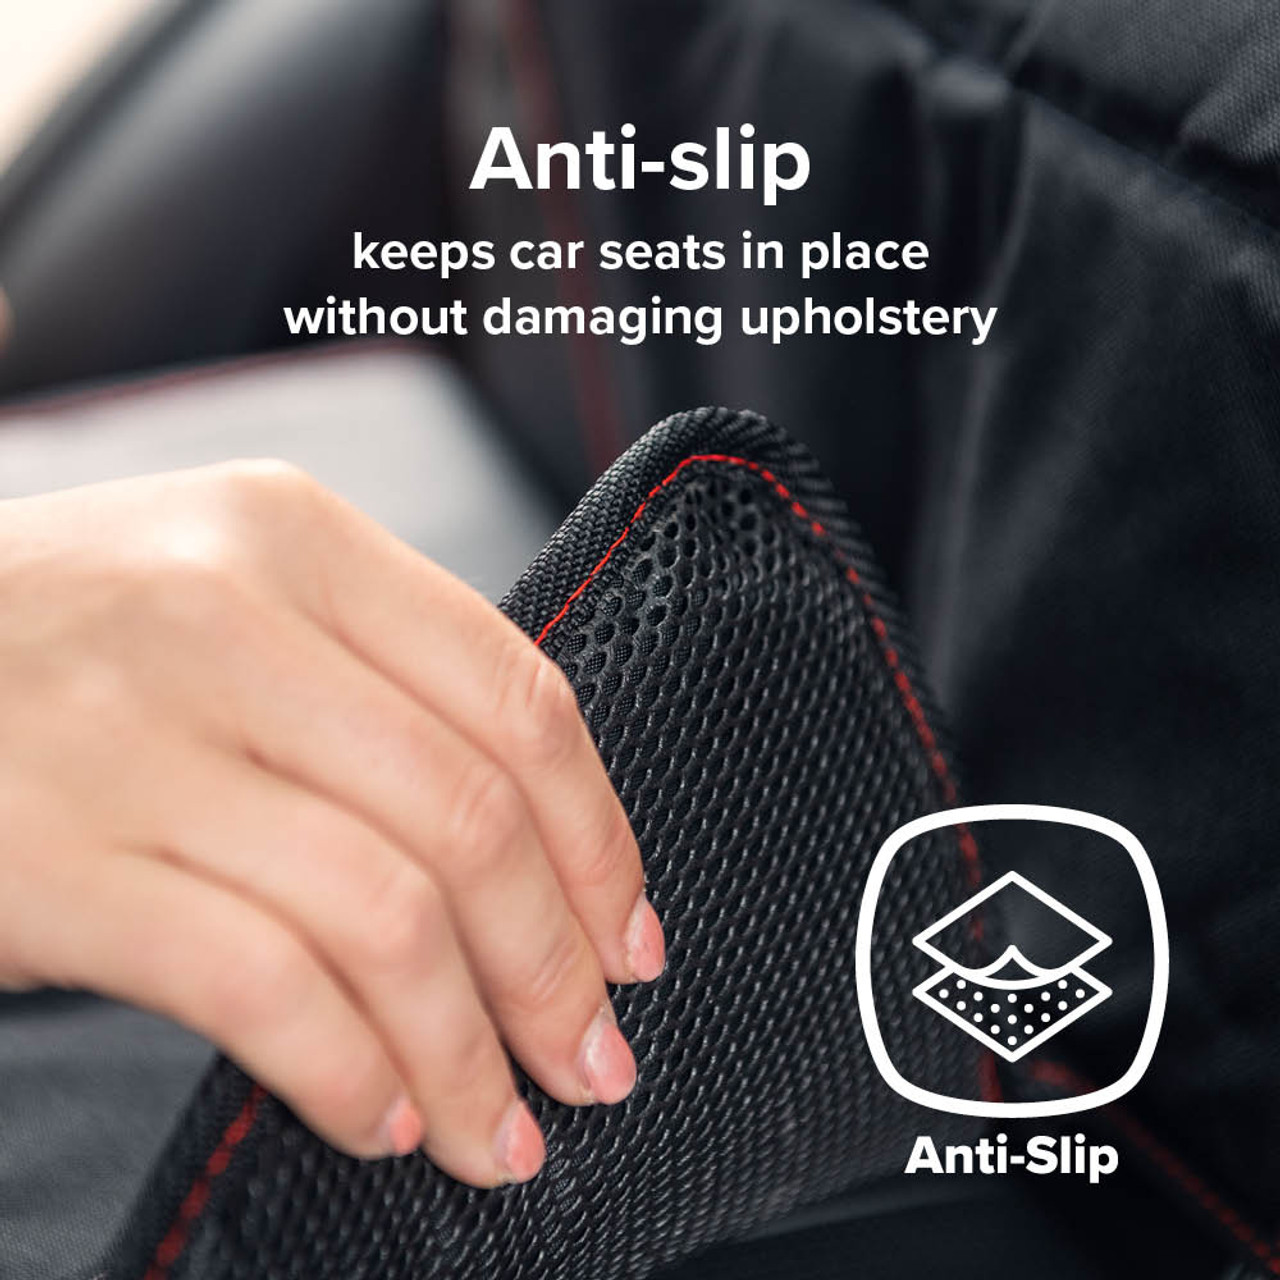 Super Mat® Seat Cover diono® Car Seats  Travel Accessories